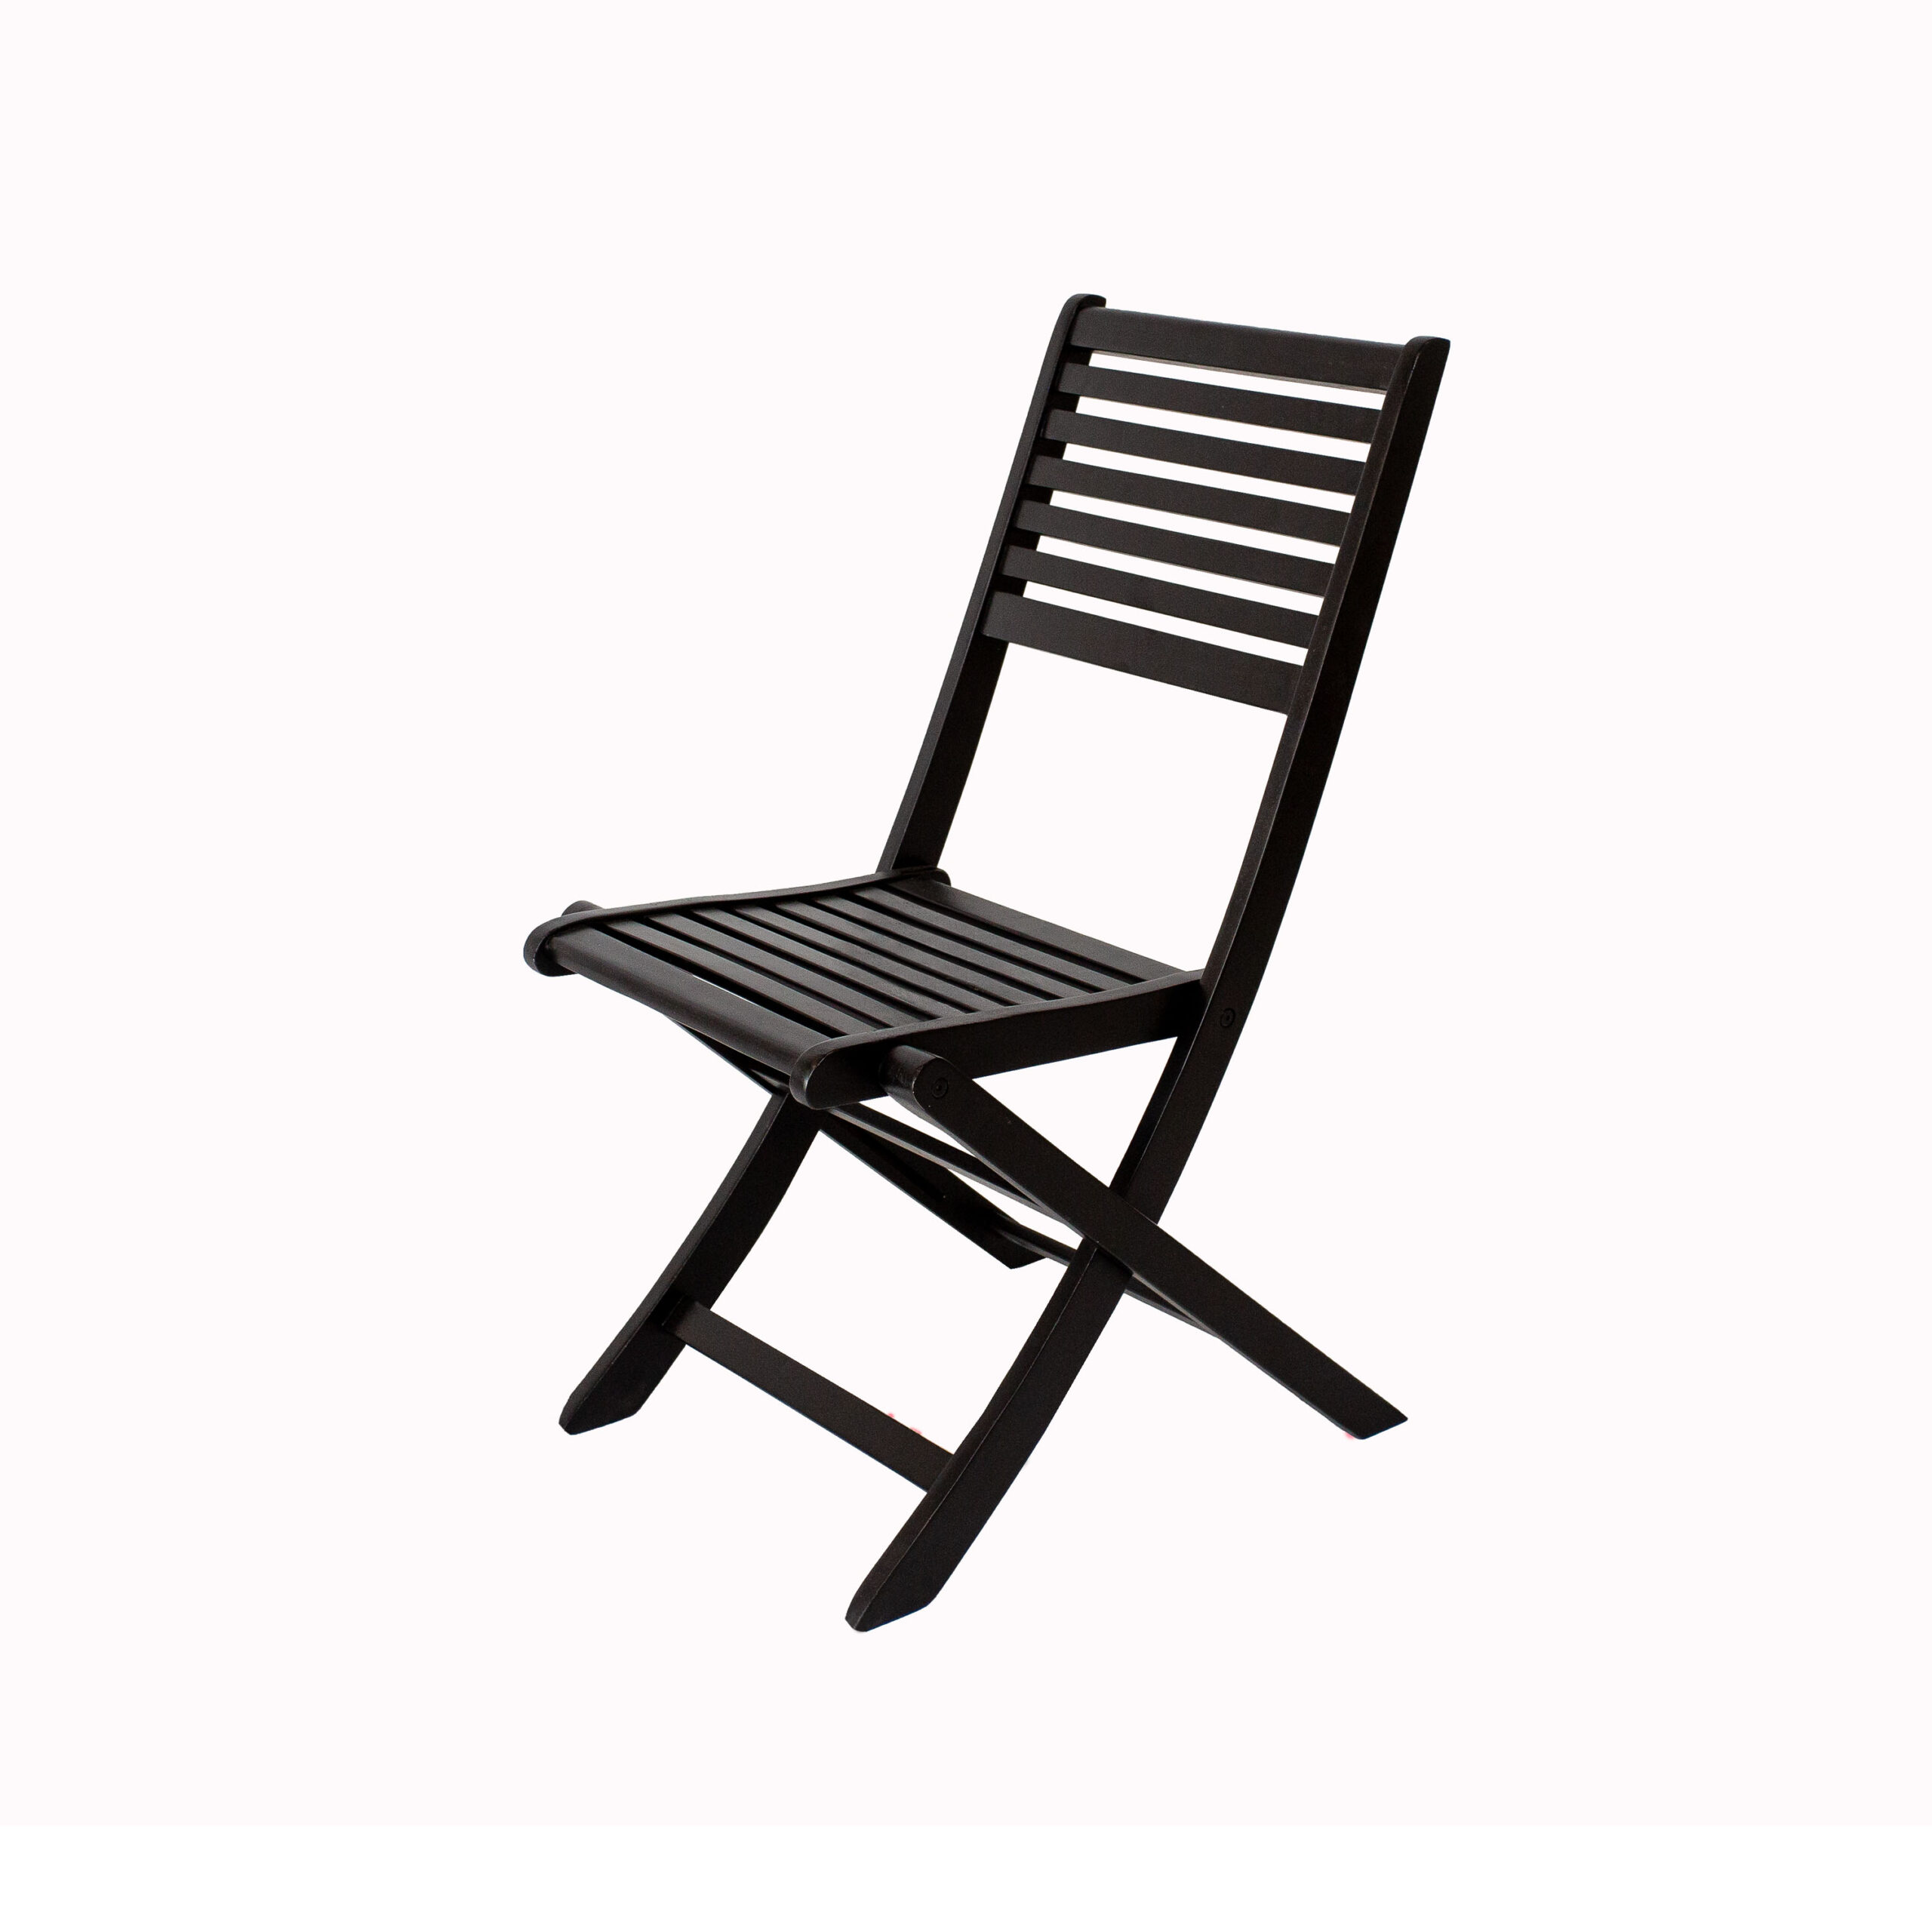 Kingsbury Garden Chair Black